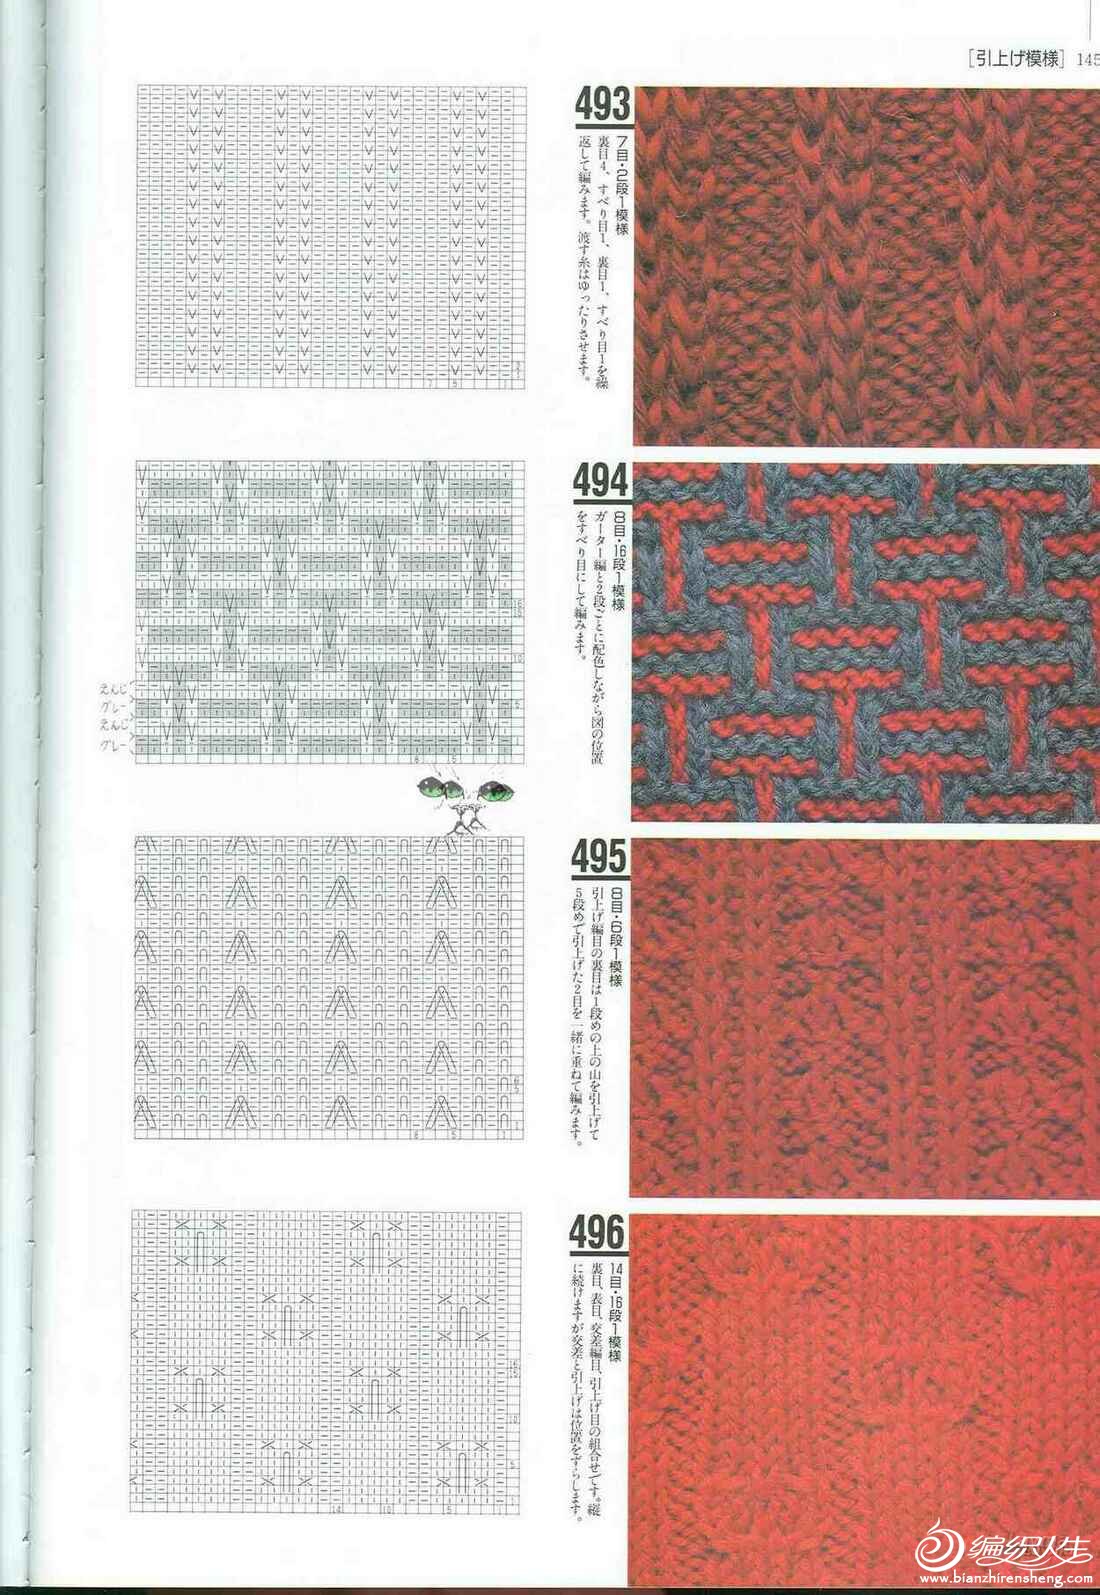 Knitting Patterns 500 142.jpg